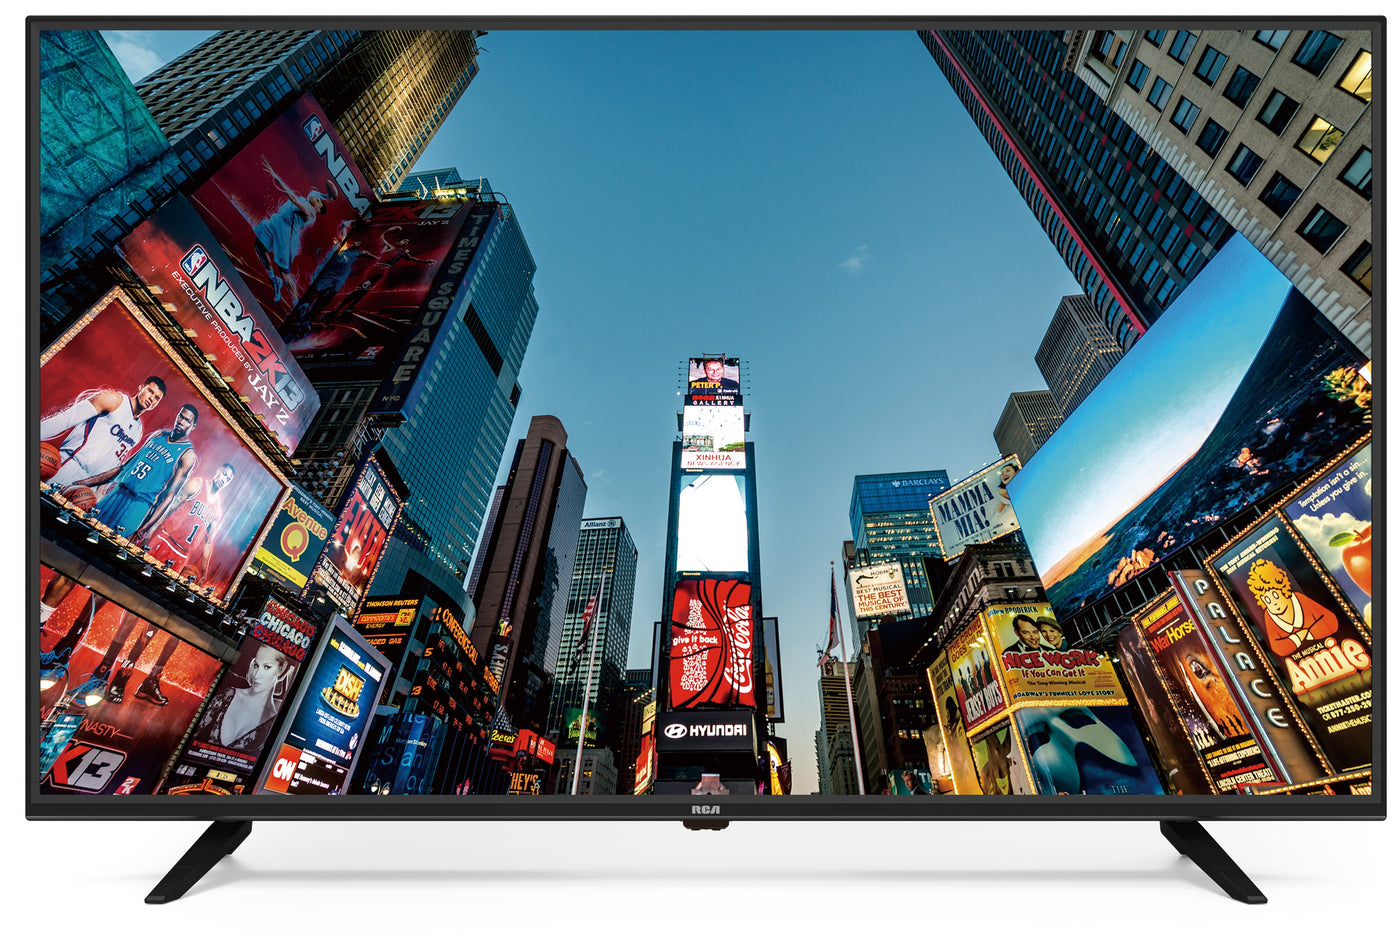 43 Smart FULL HD (1080P) LED RCA ROKU TV